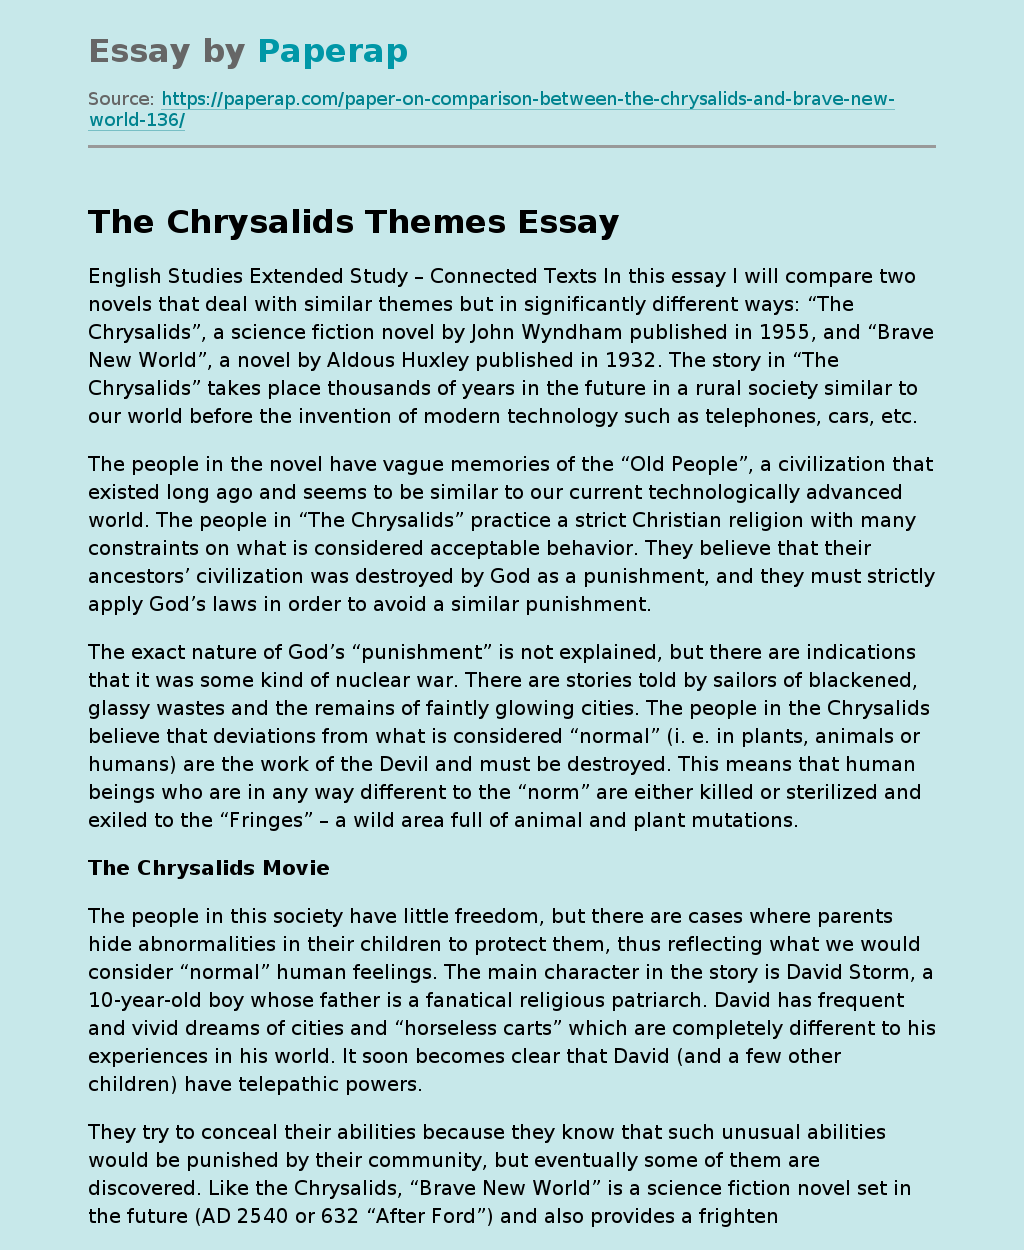 The Chrysalids Themes